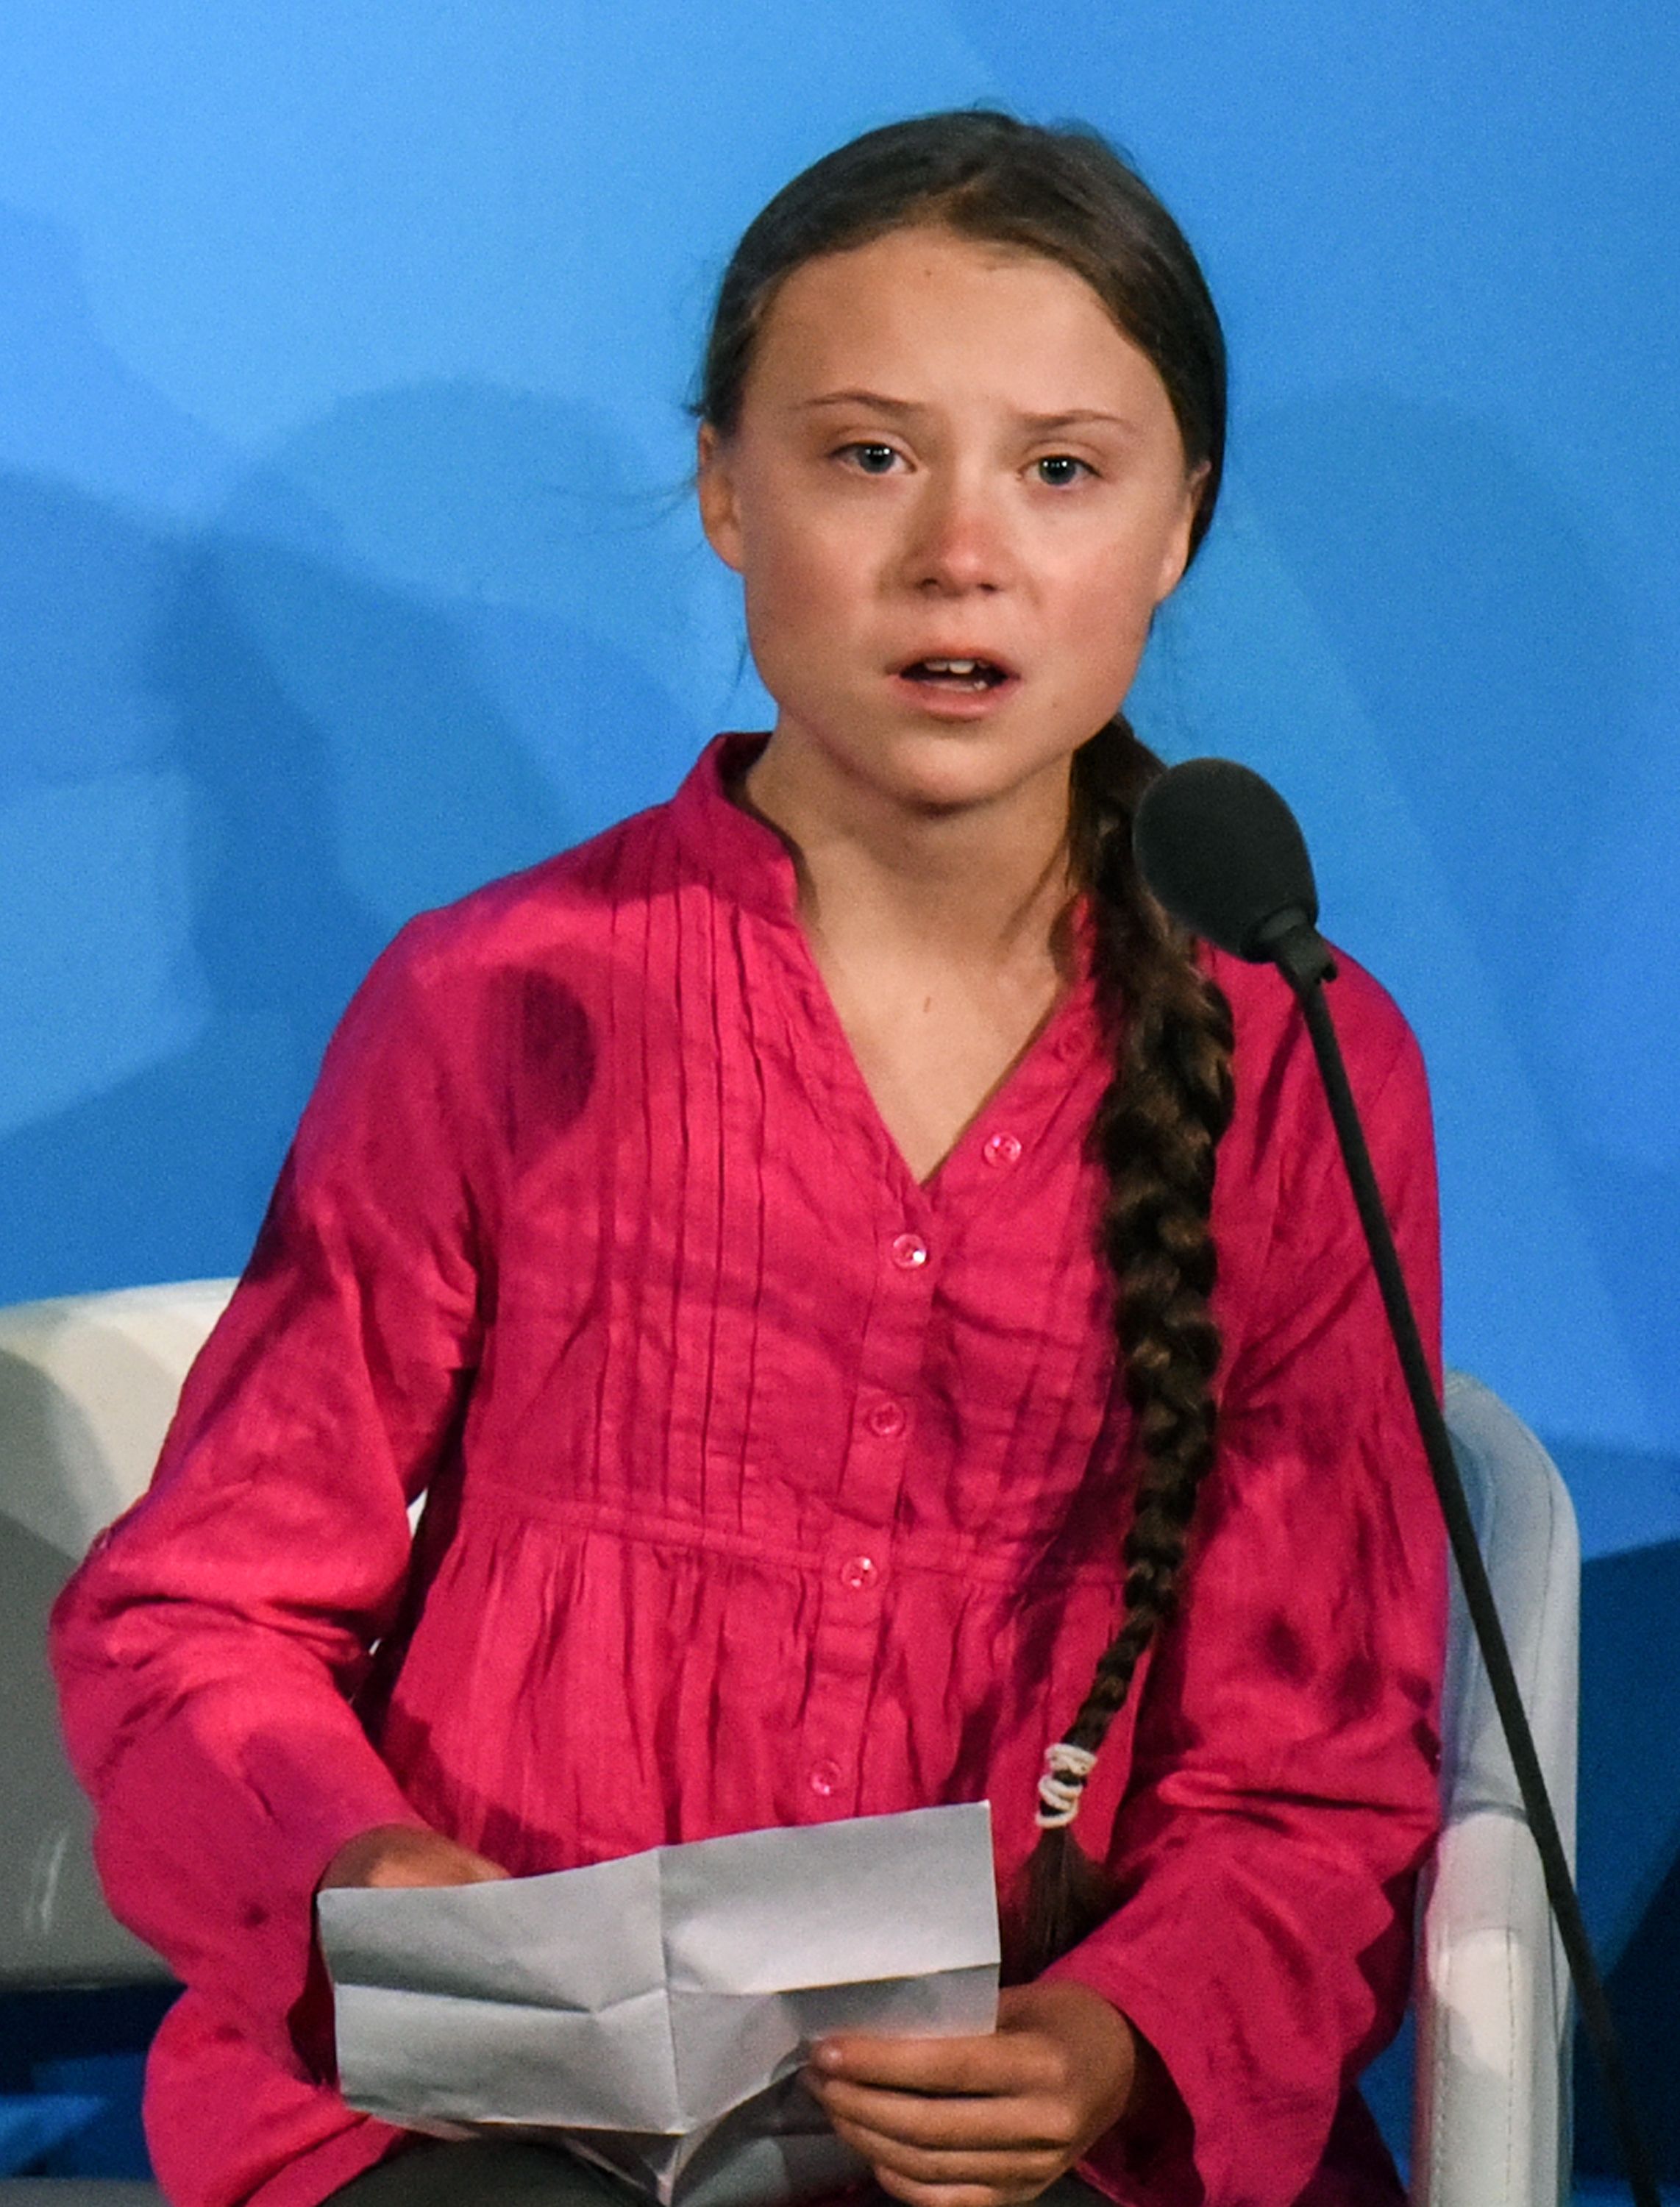 Greta Thunberg Trolls Trump With His Own Words